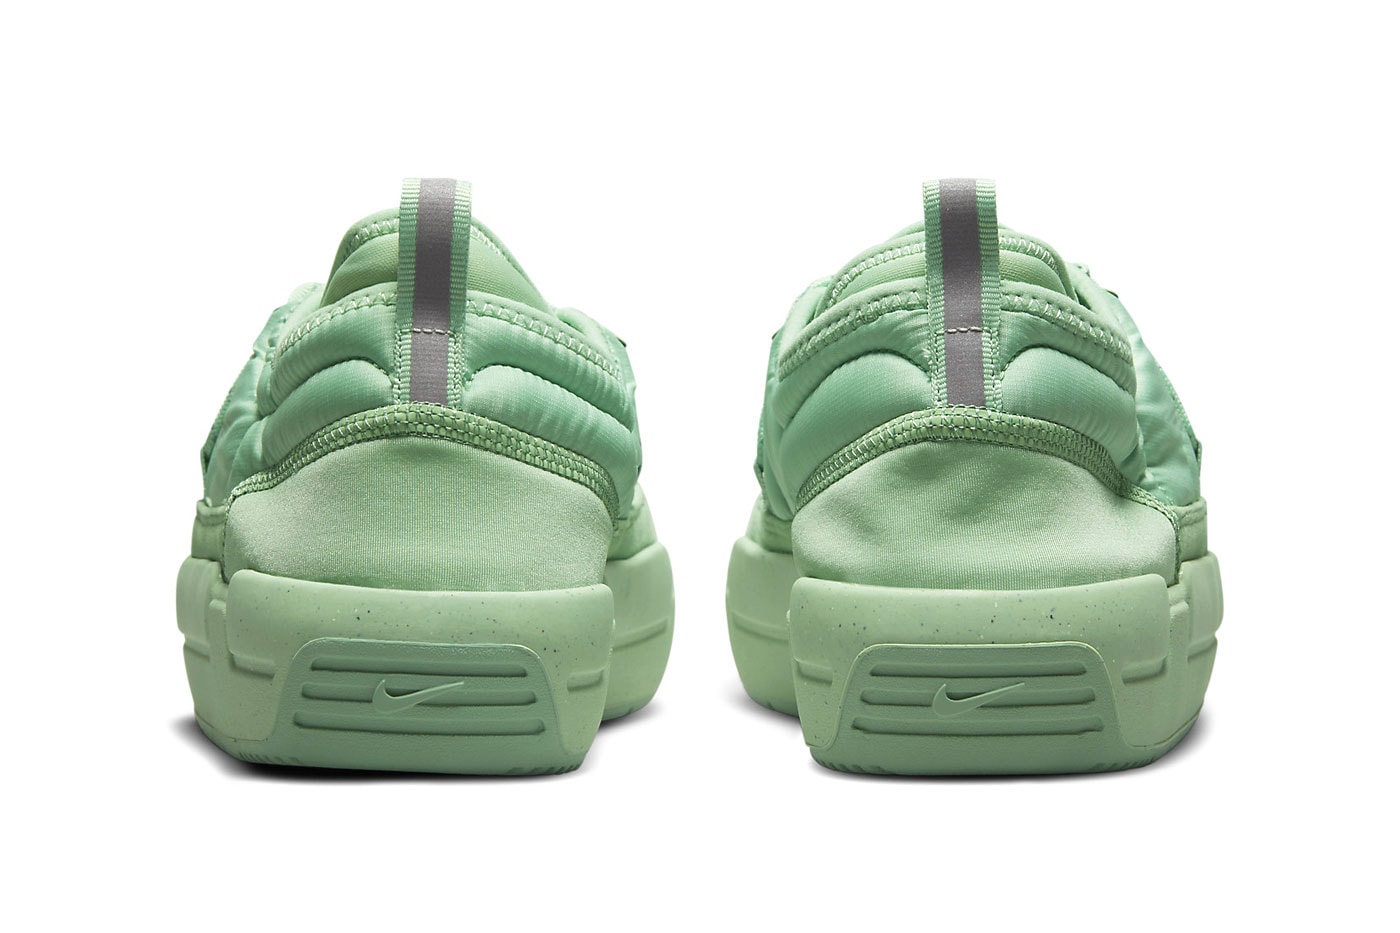 Nike Offline Cool Grey Enamel Green First Look Release Info ct3290-002 ct3290-300 Date Buy Price 